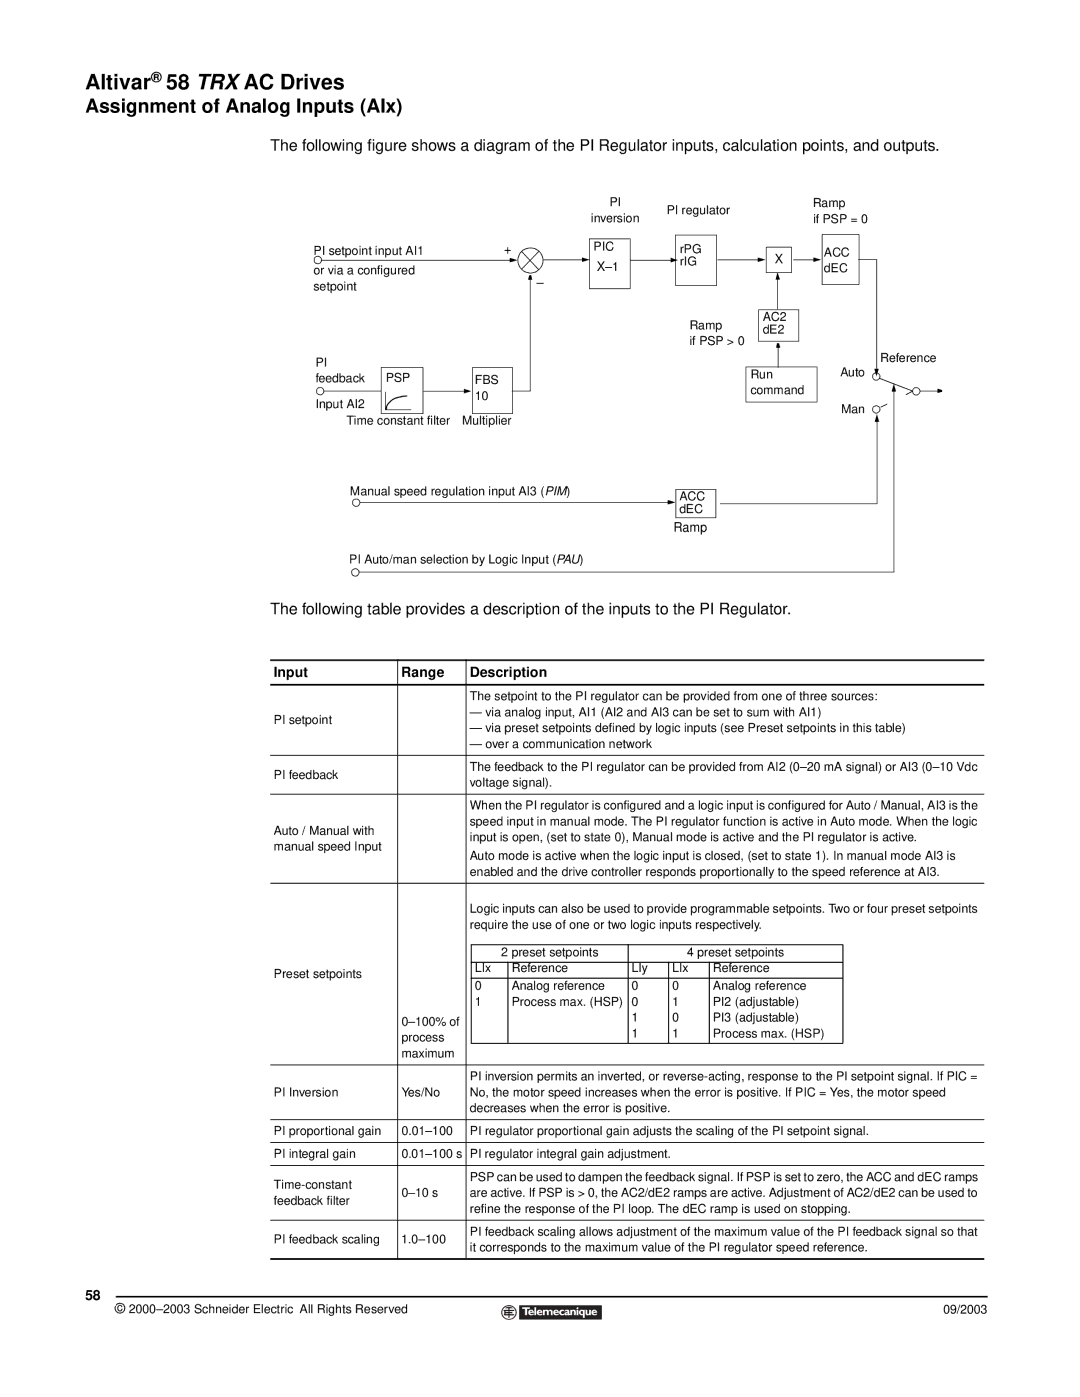 Schneider Electric 58 TRX manual Input Range Description, Psp Fbs 